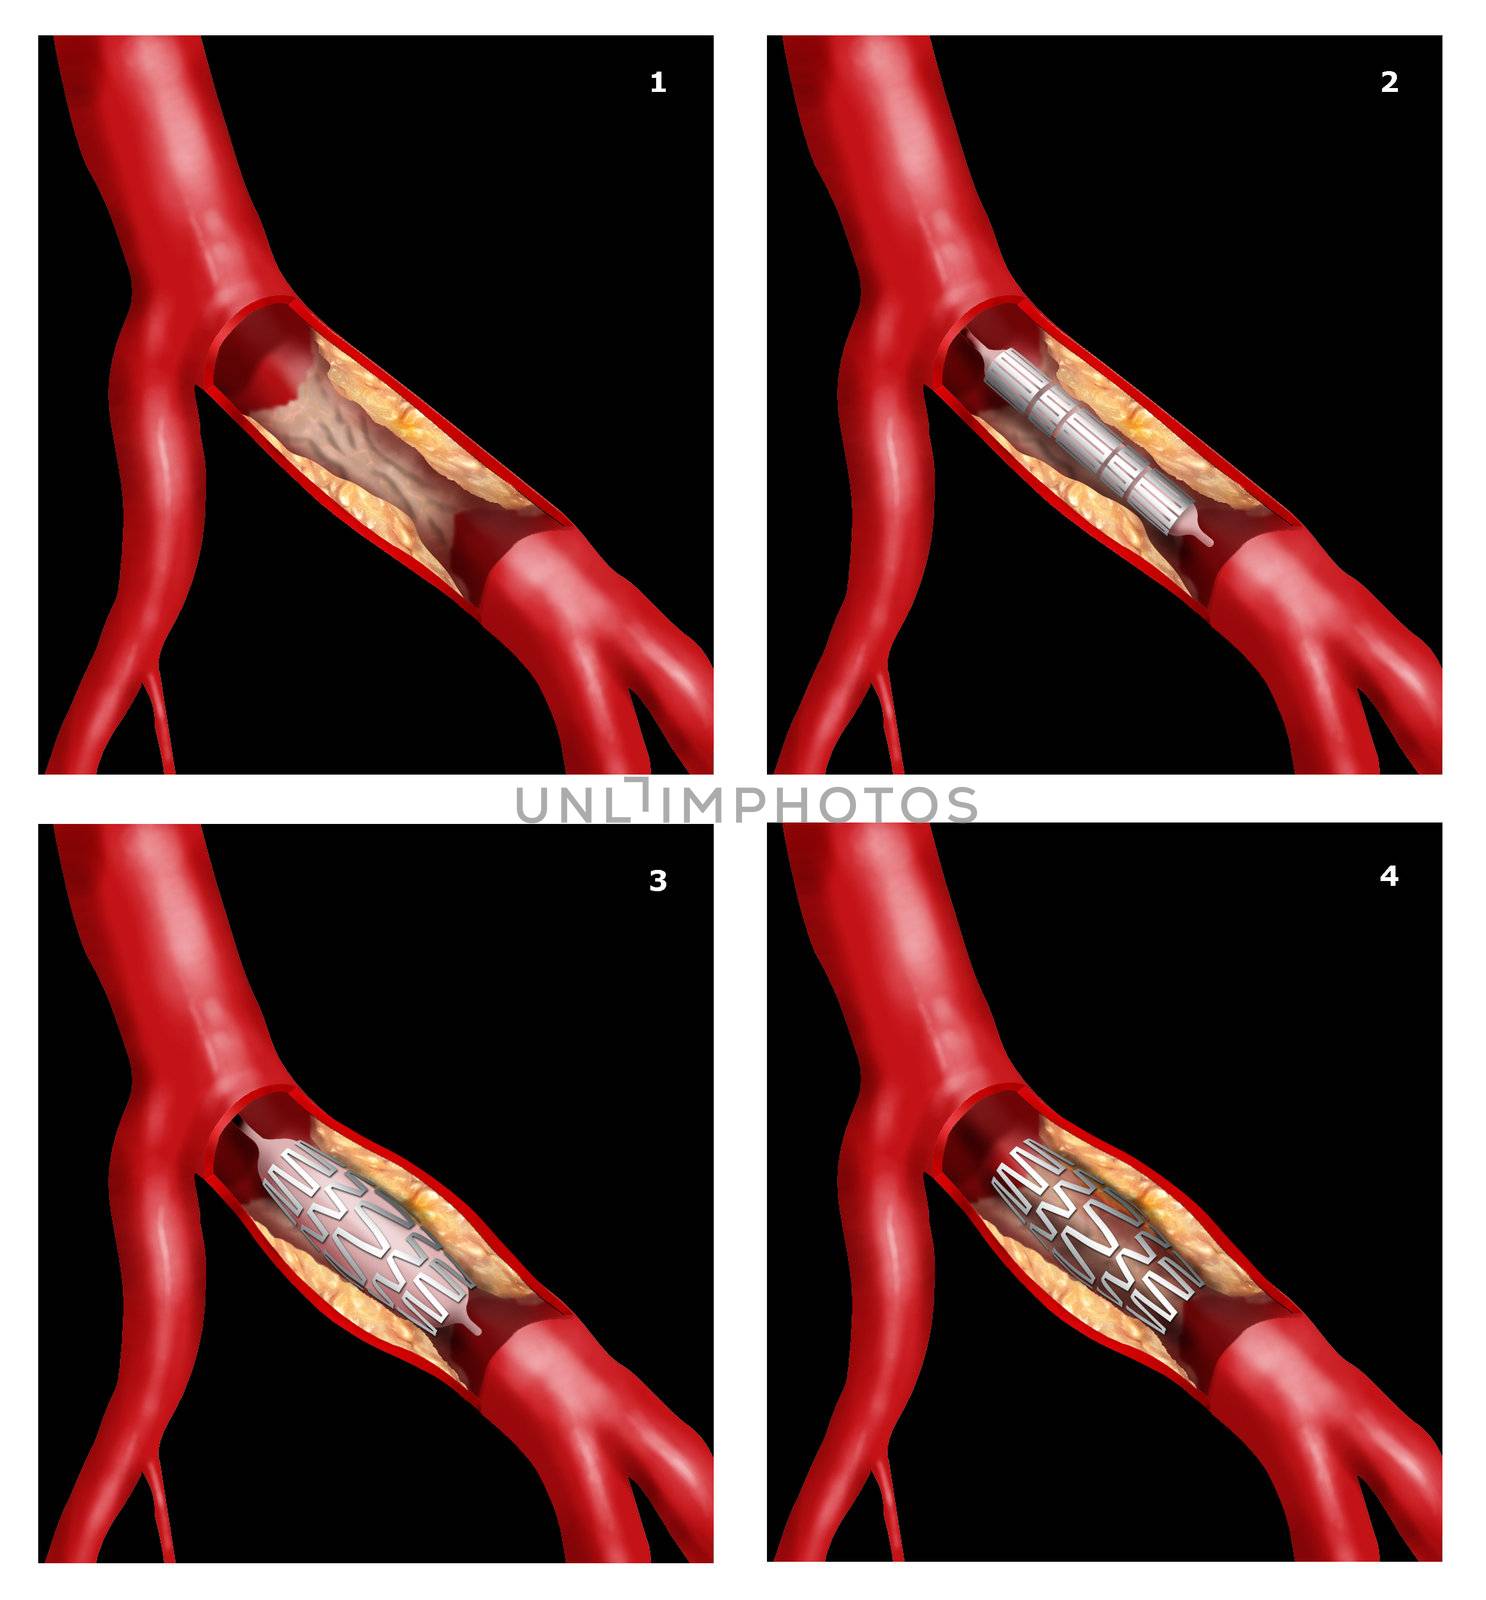 coronary stent by alexonline